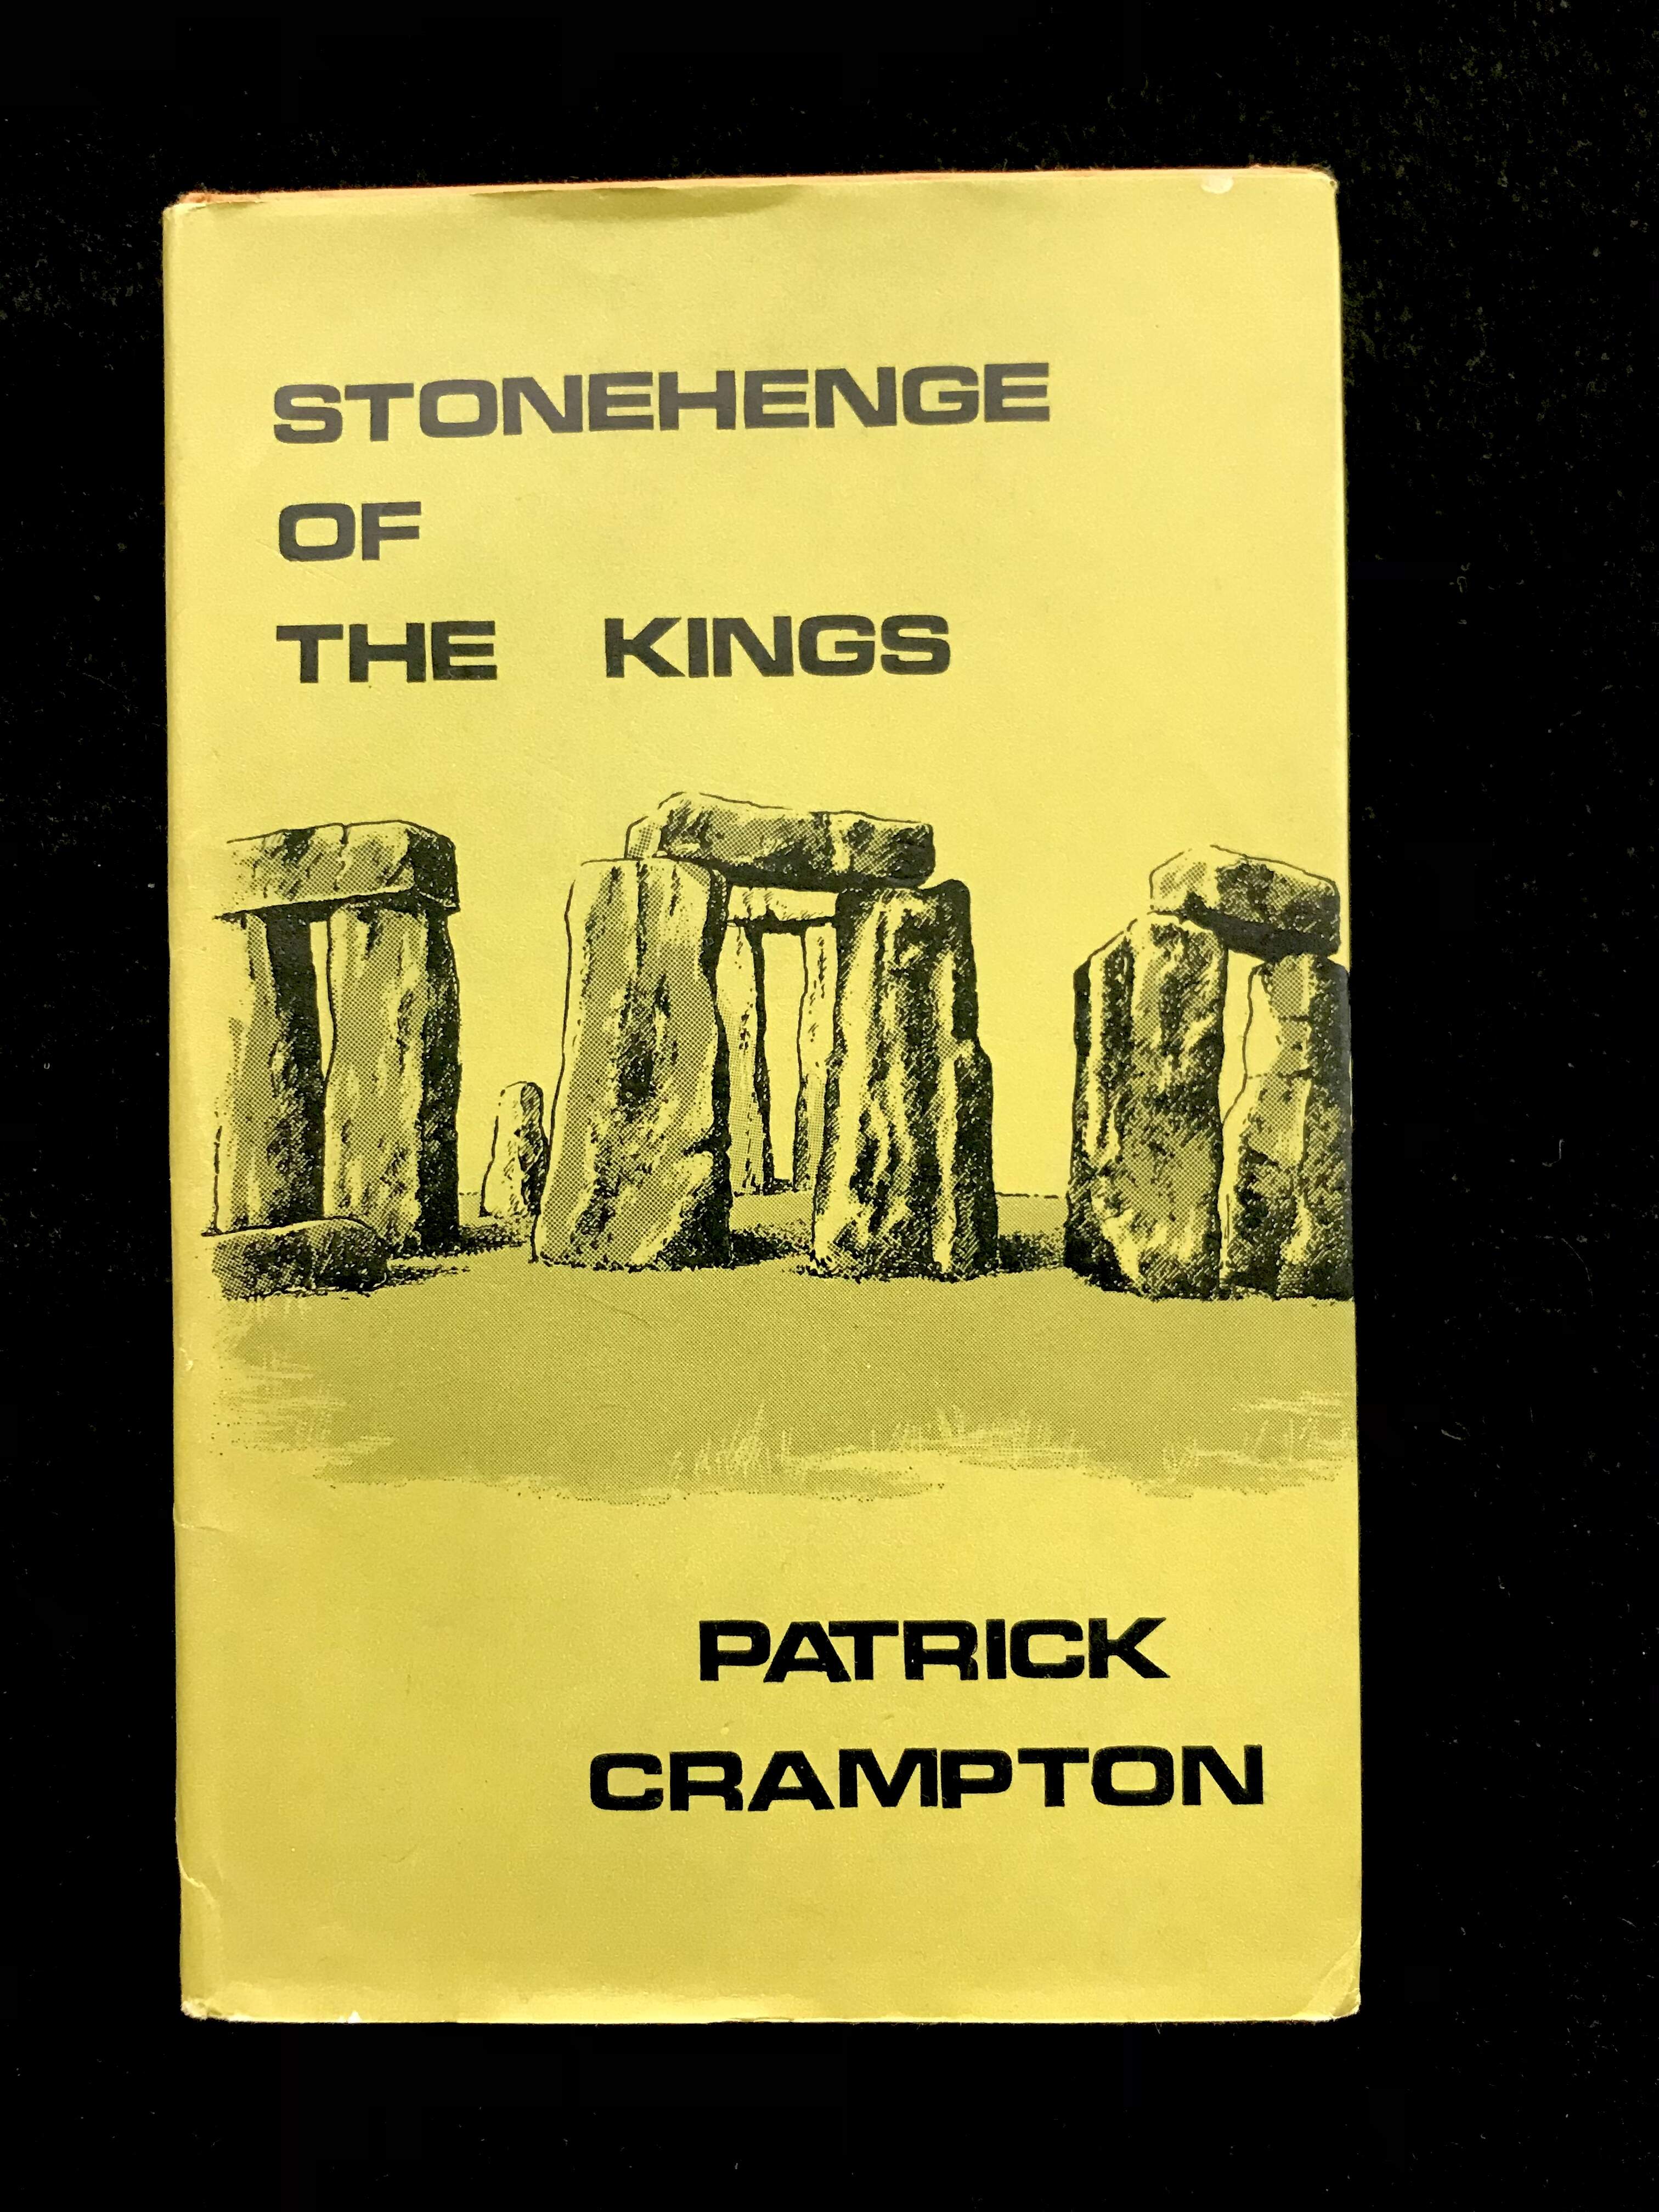 Stonehenge Of The Kings by Patrick Crampton